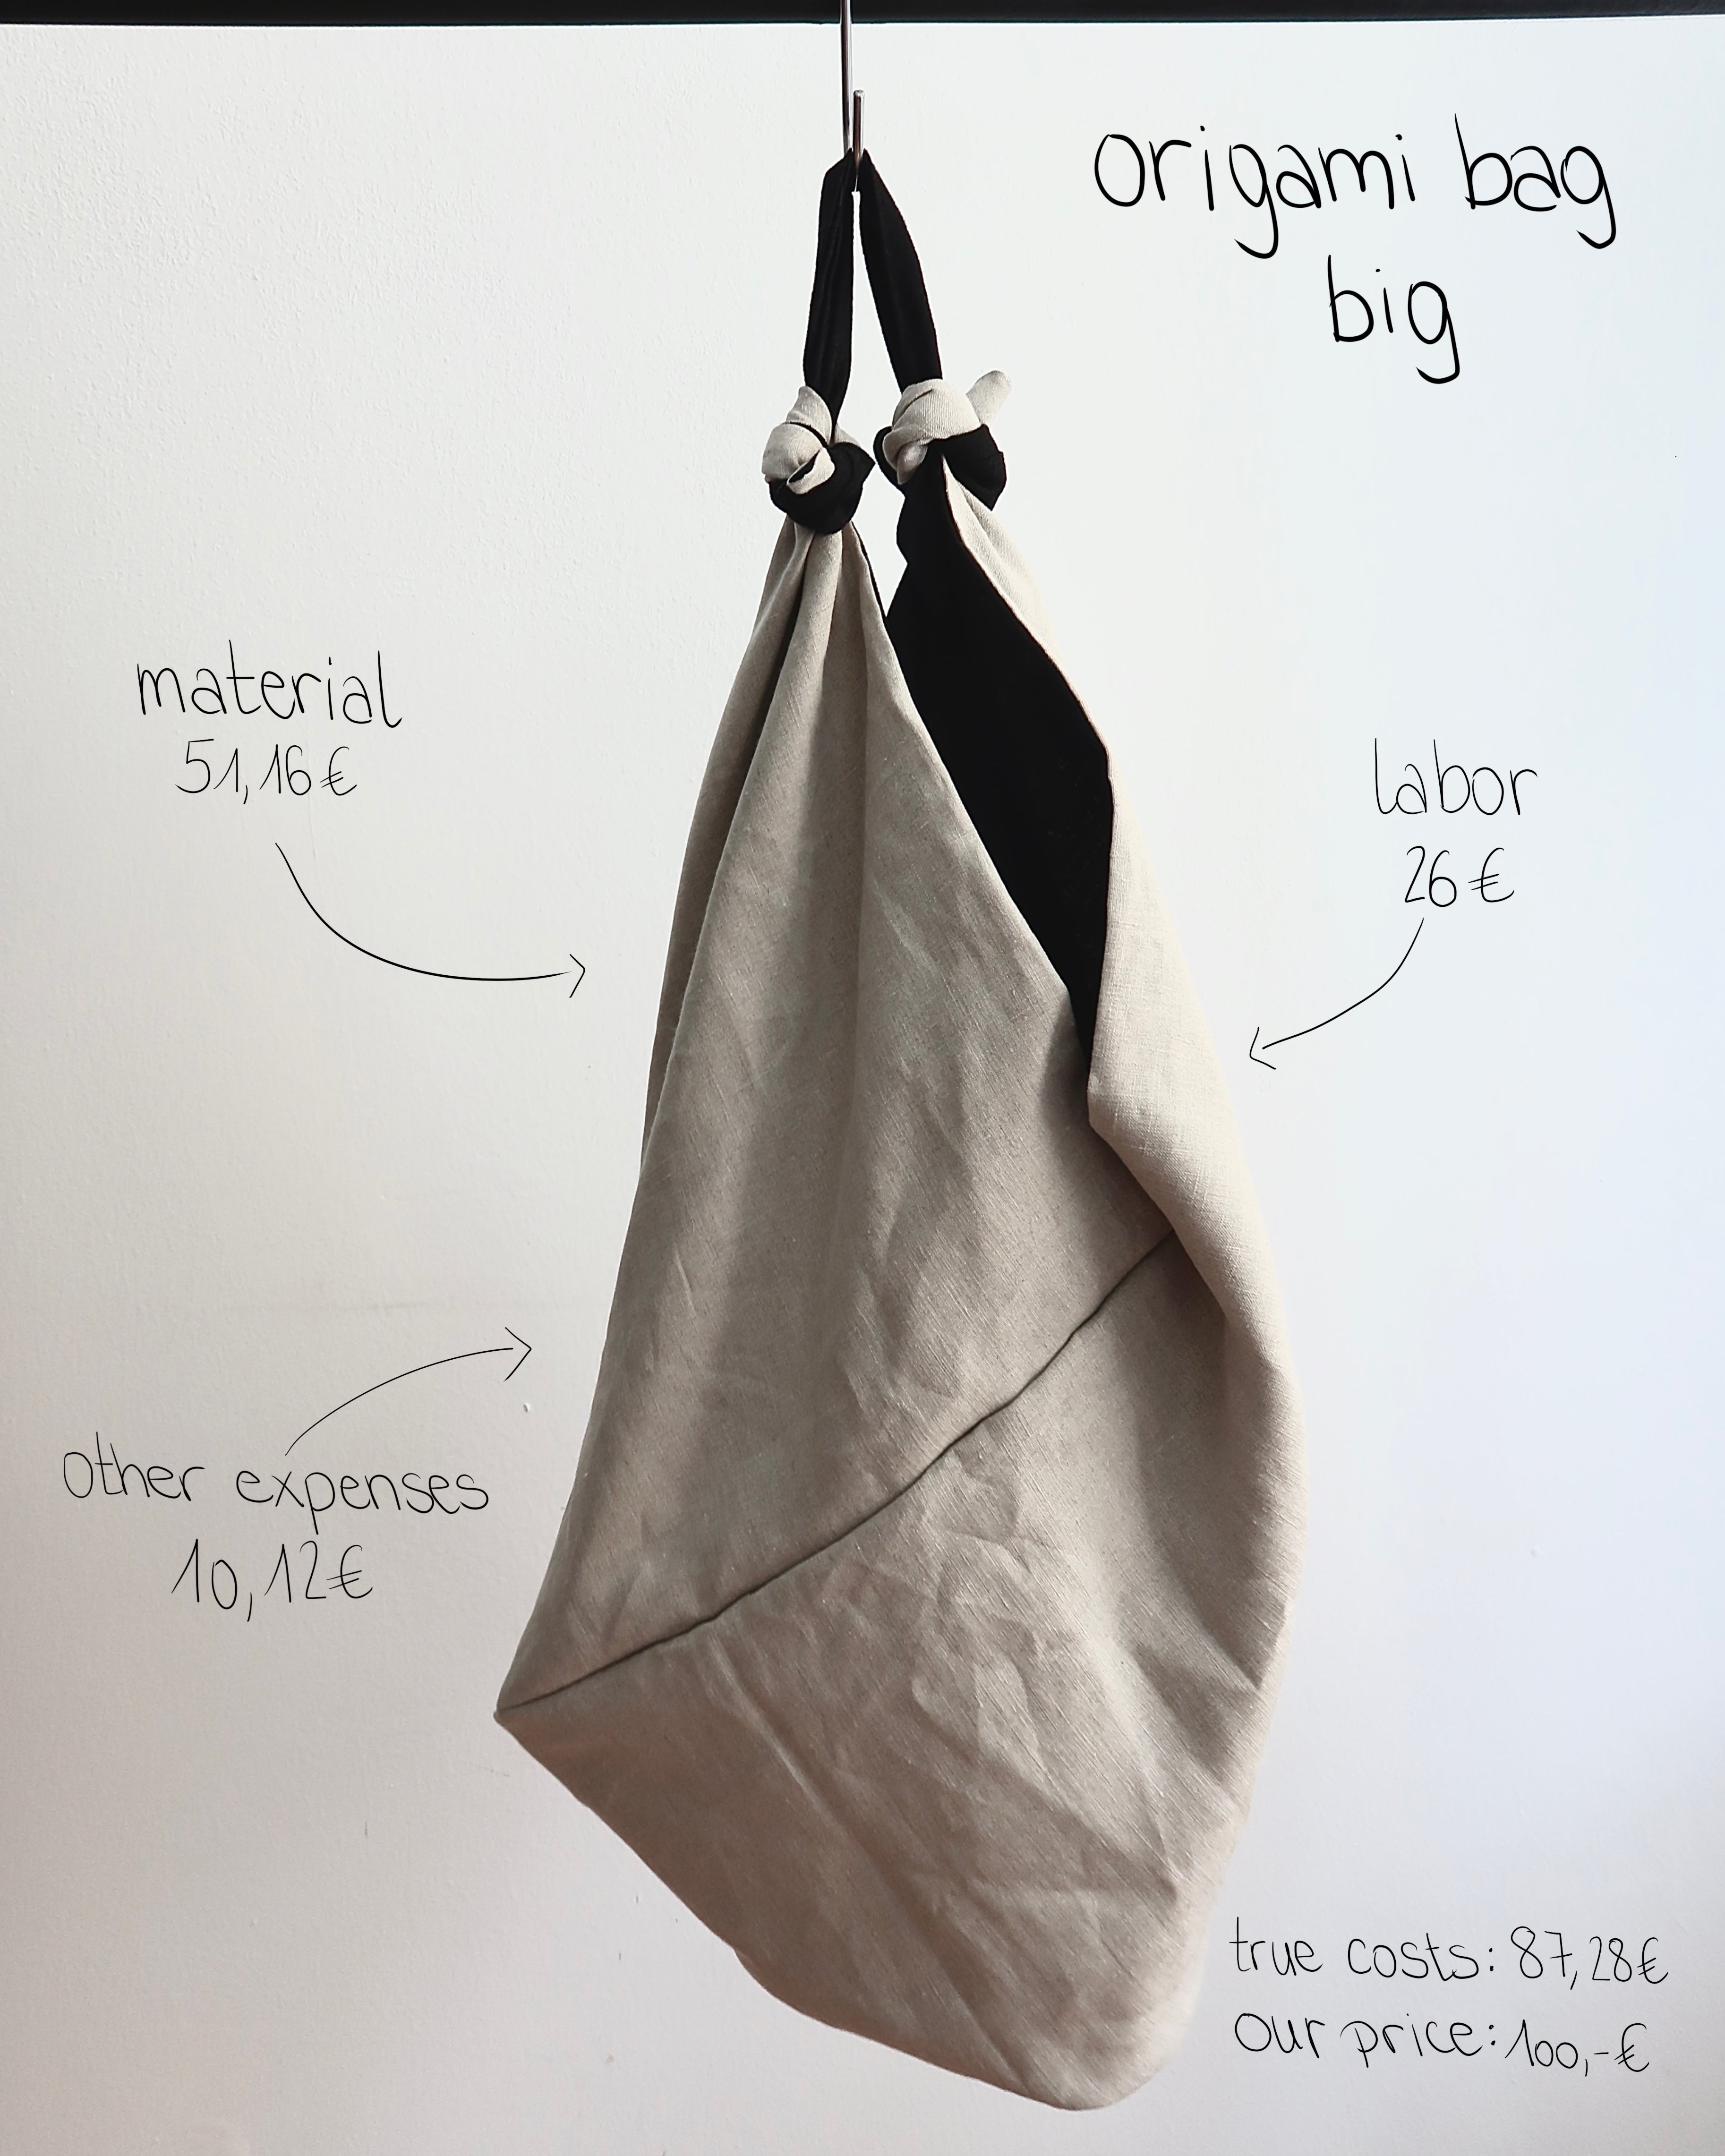 Michele Bilyeu Creates With Heart and Hands: Origami 'Petal Bag' Tutorial